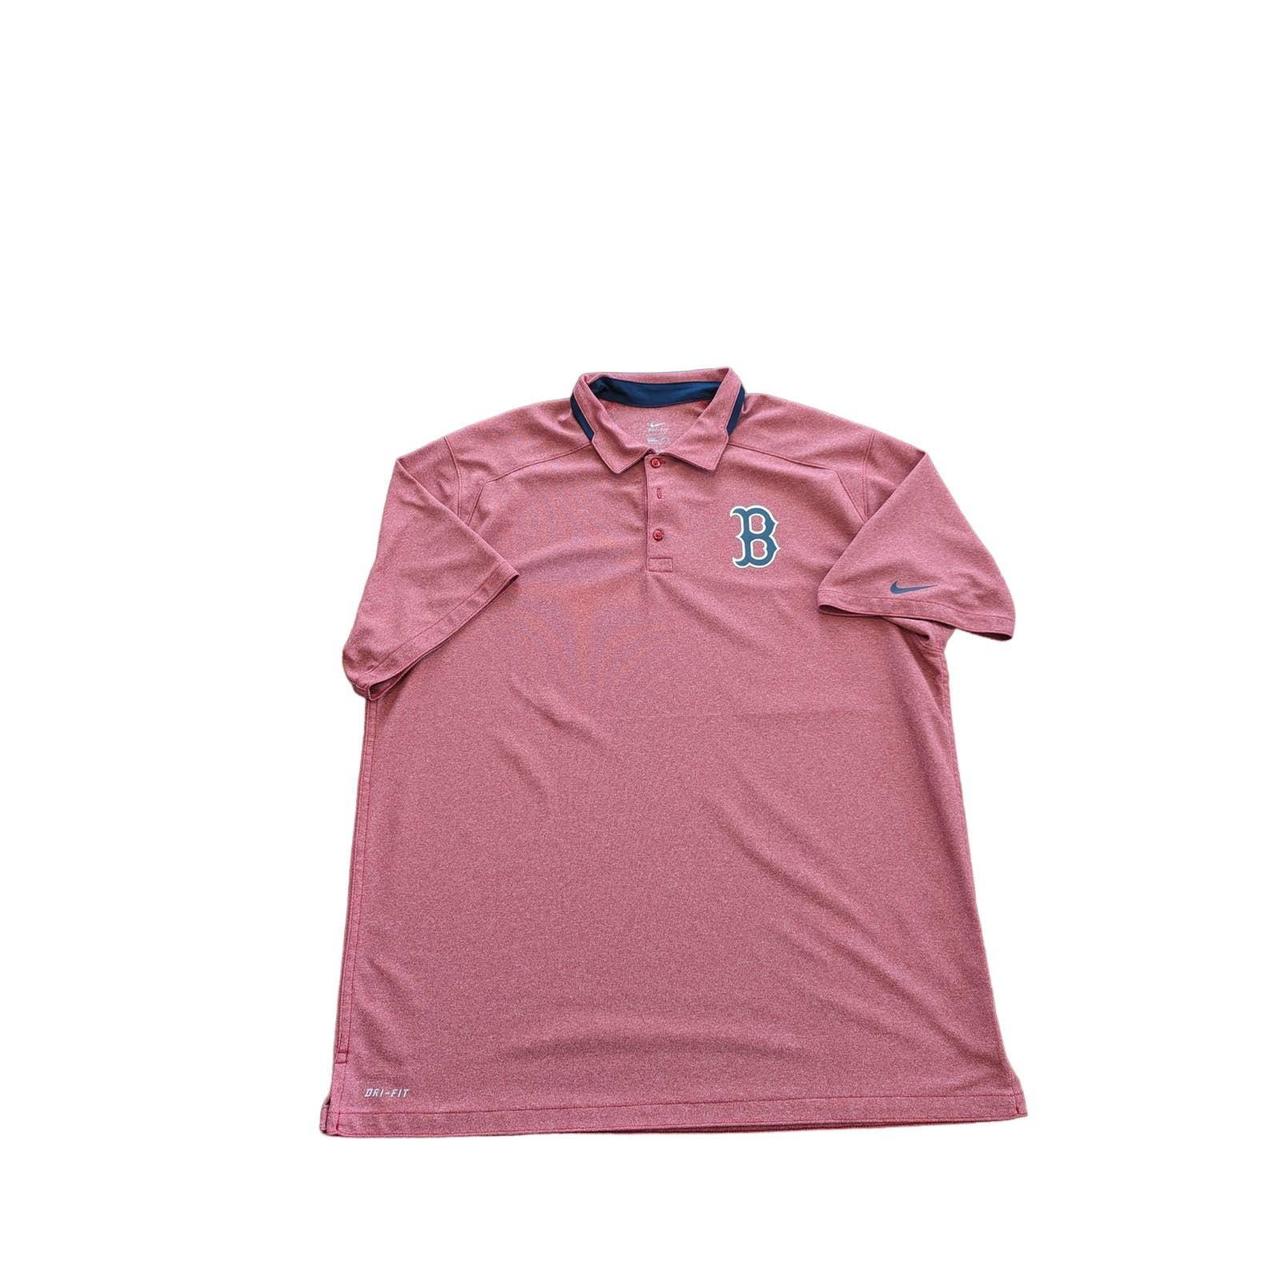 Nike Men's Polo Shirt - Red - XL